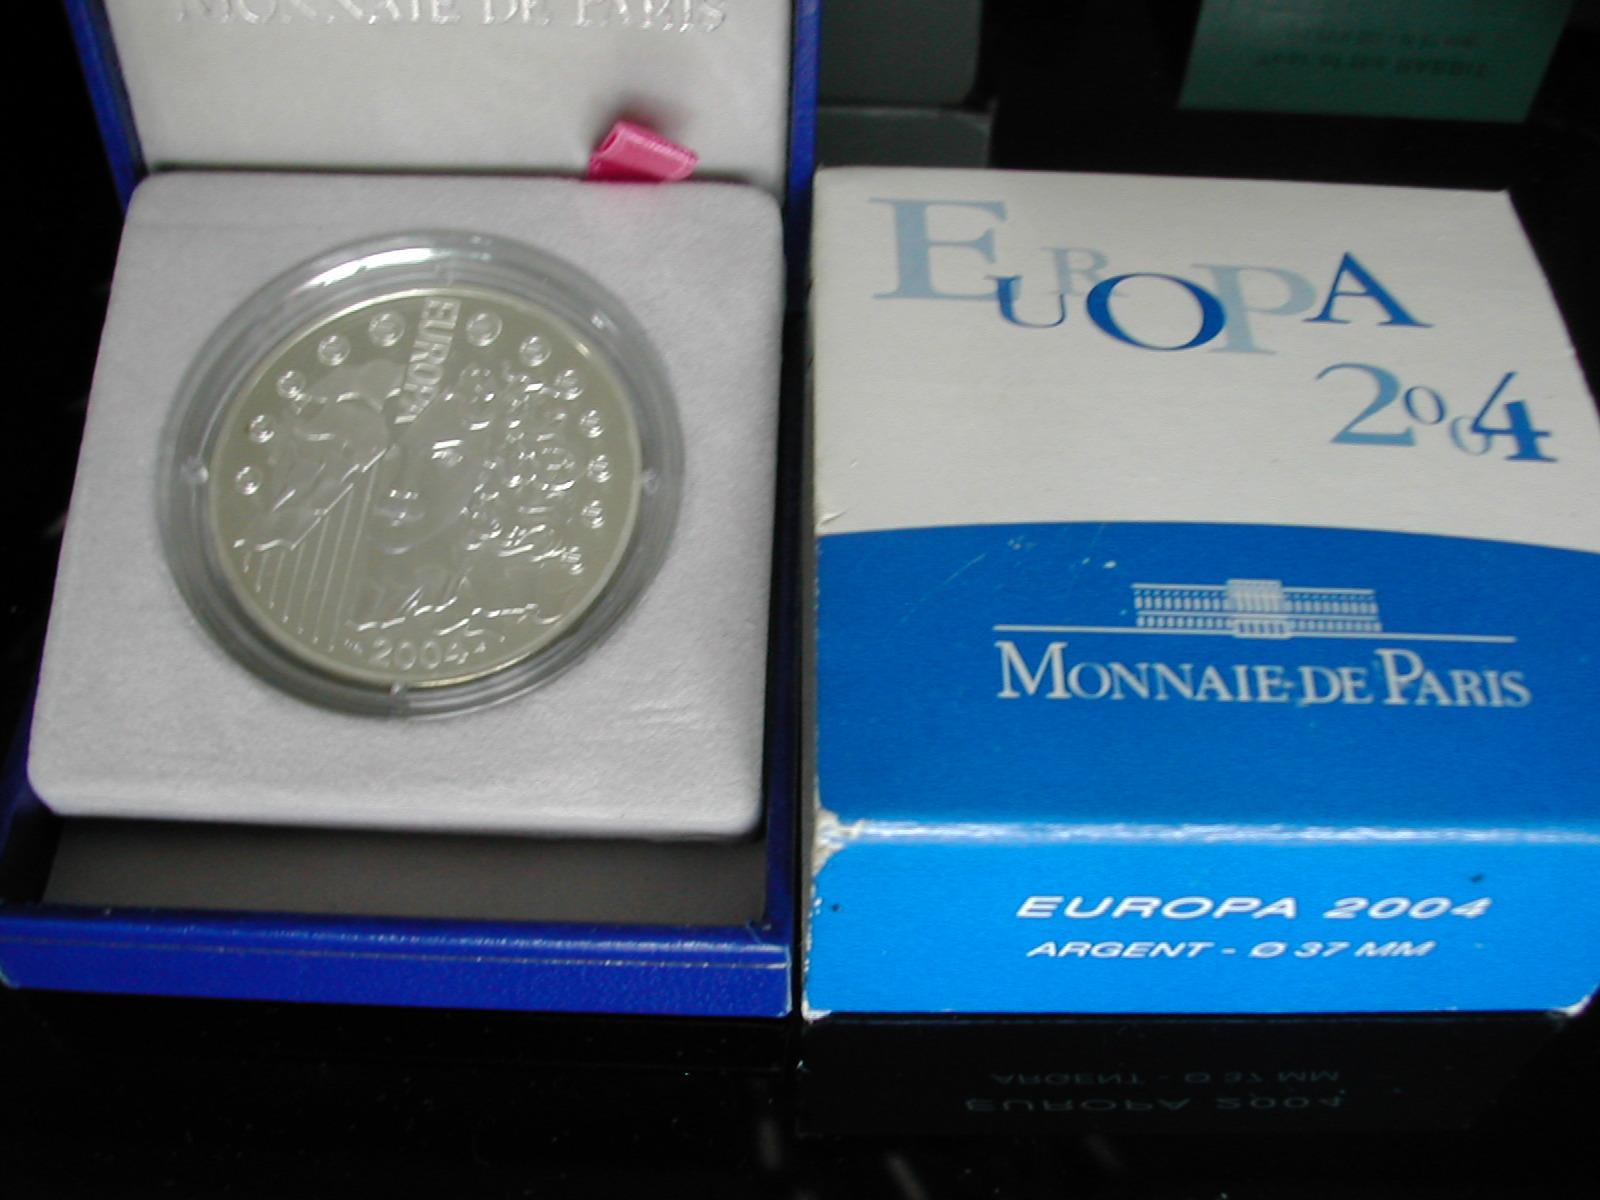 1 5 france 2004 europa a